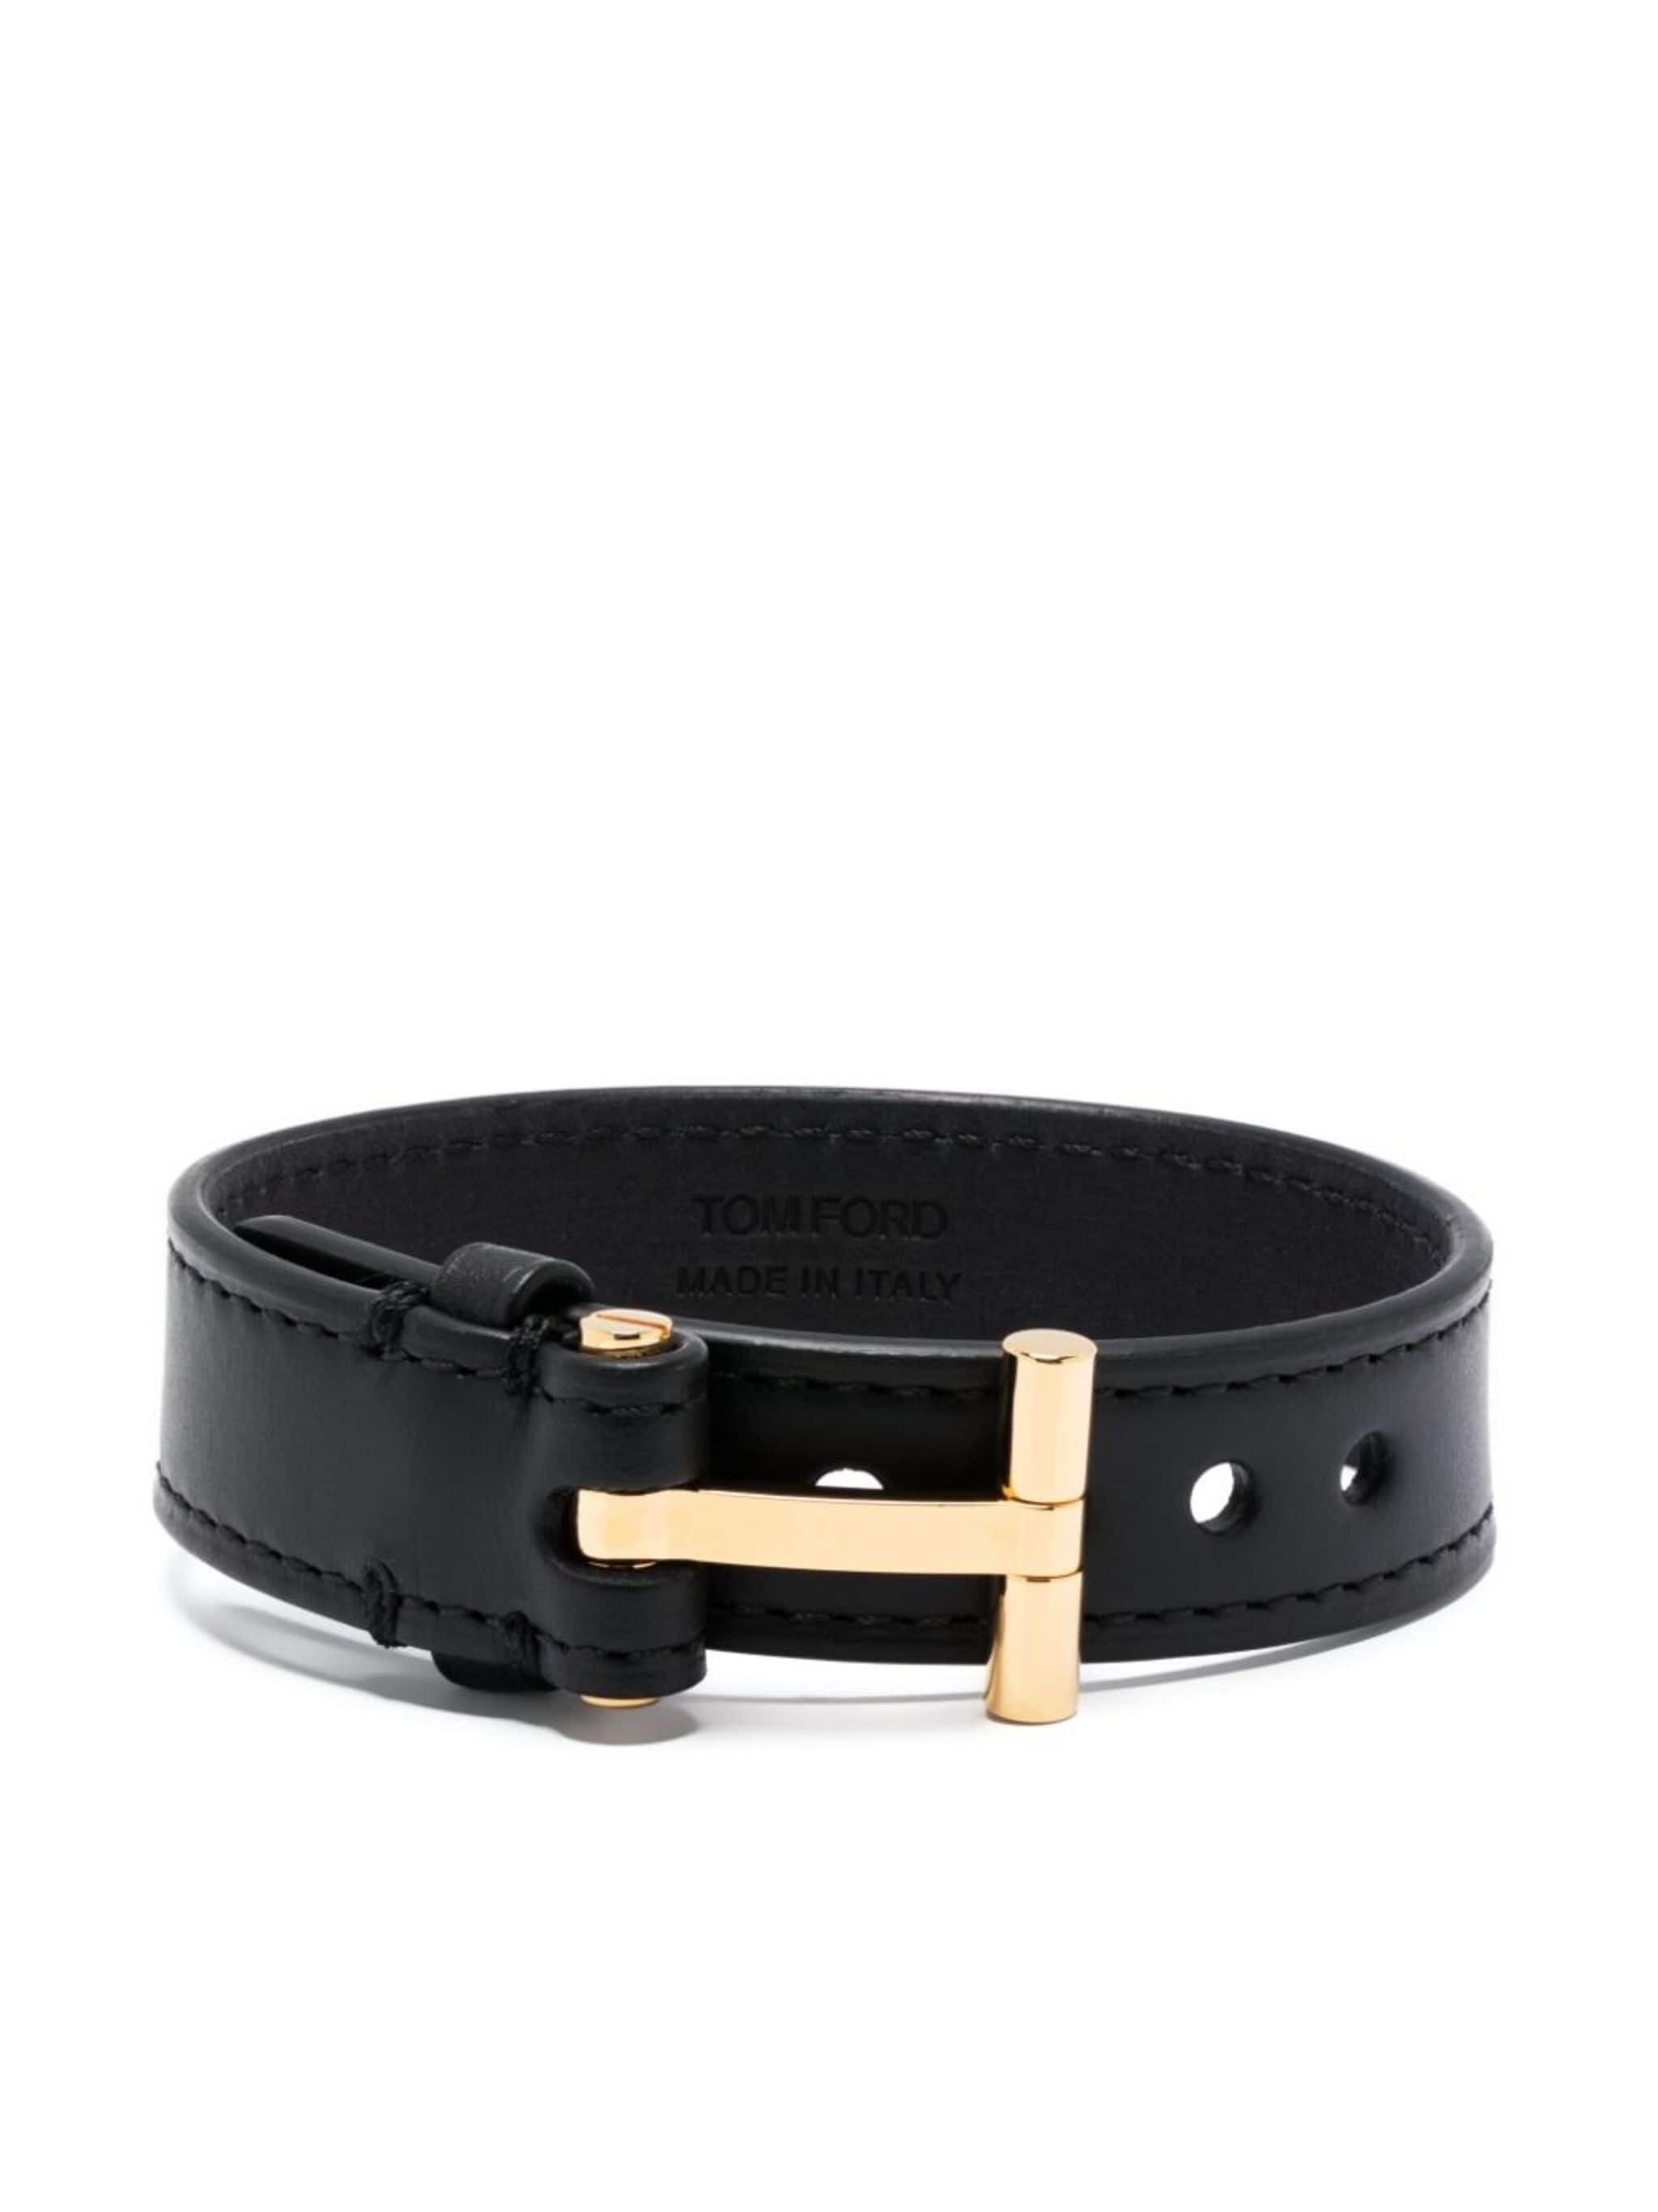 T-hinge leather bracelet - 1